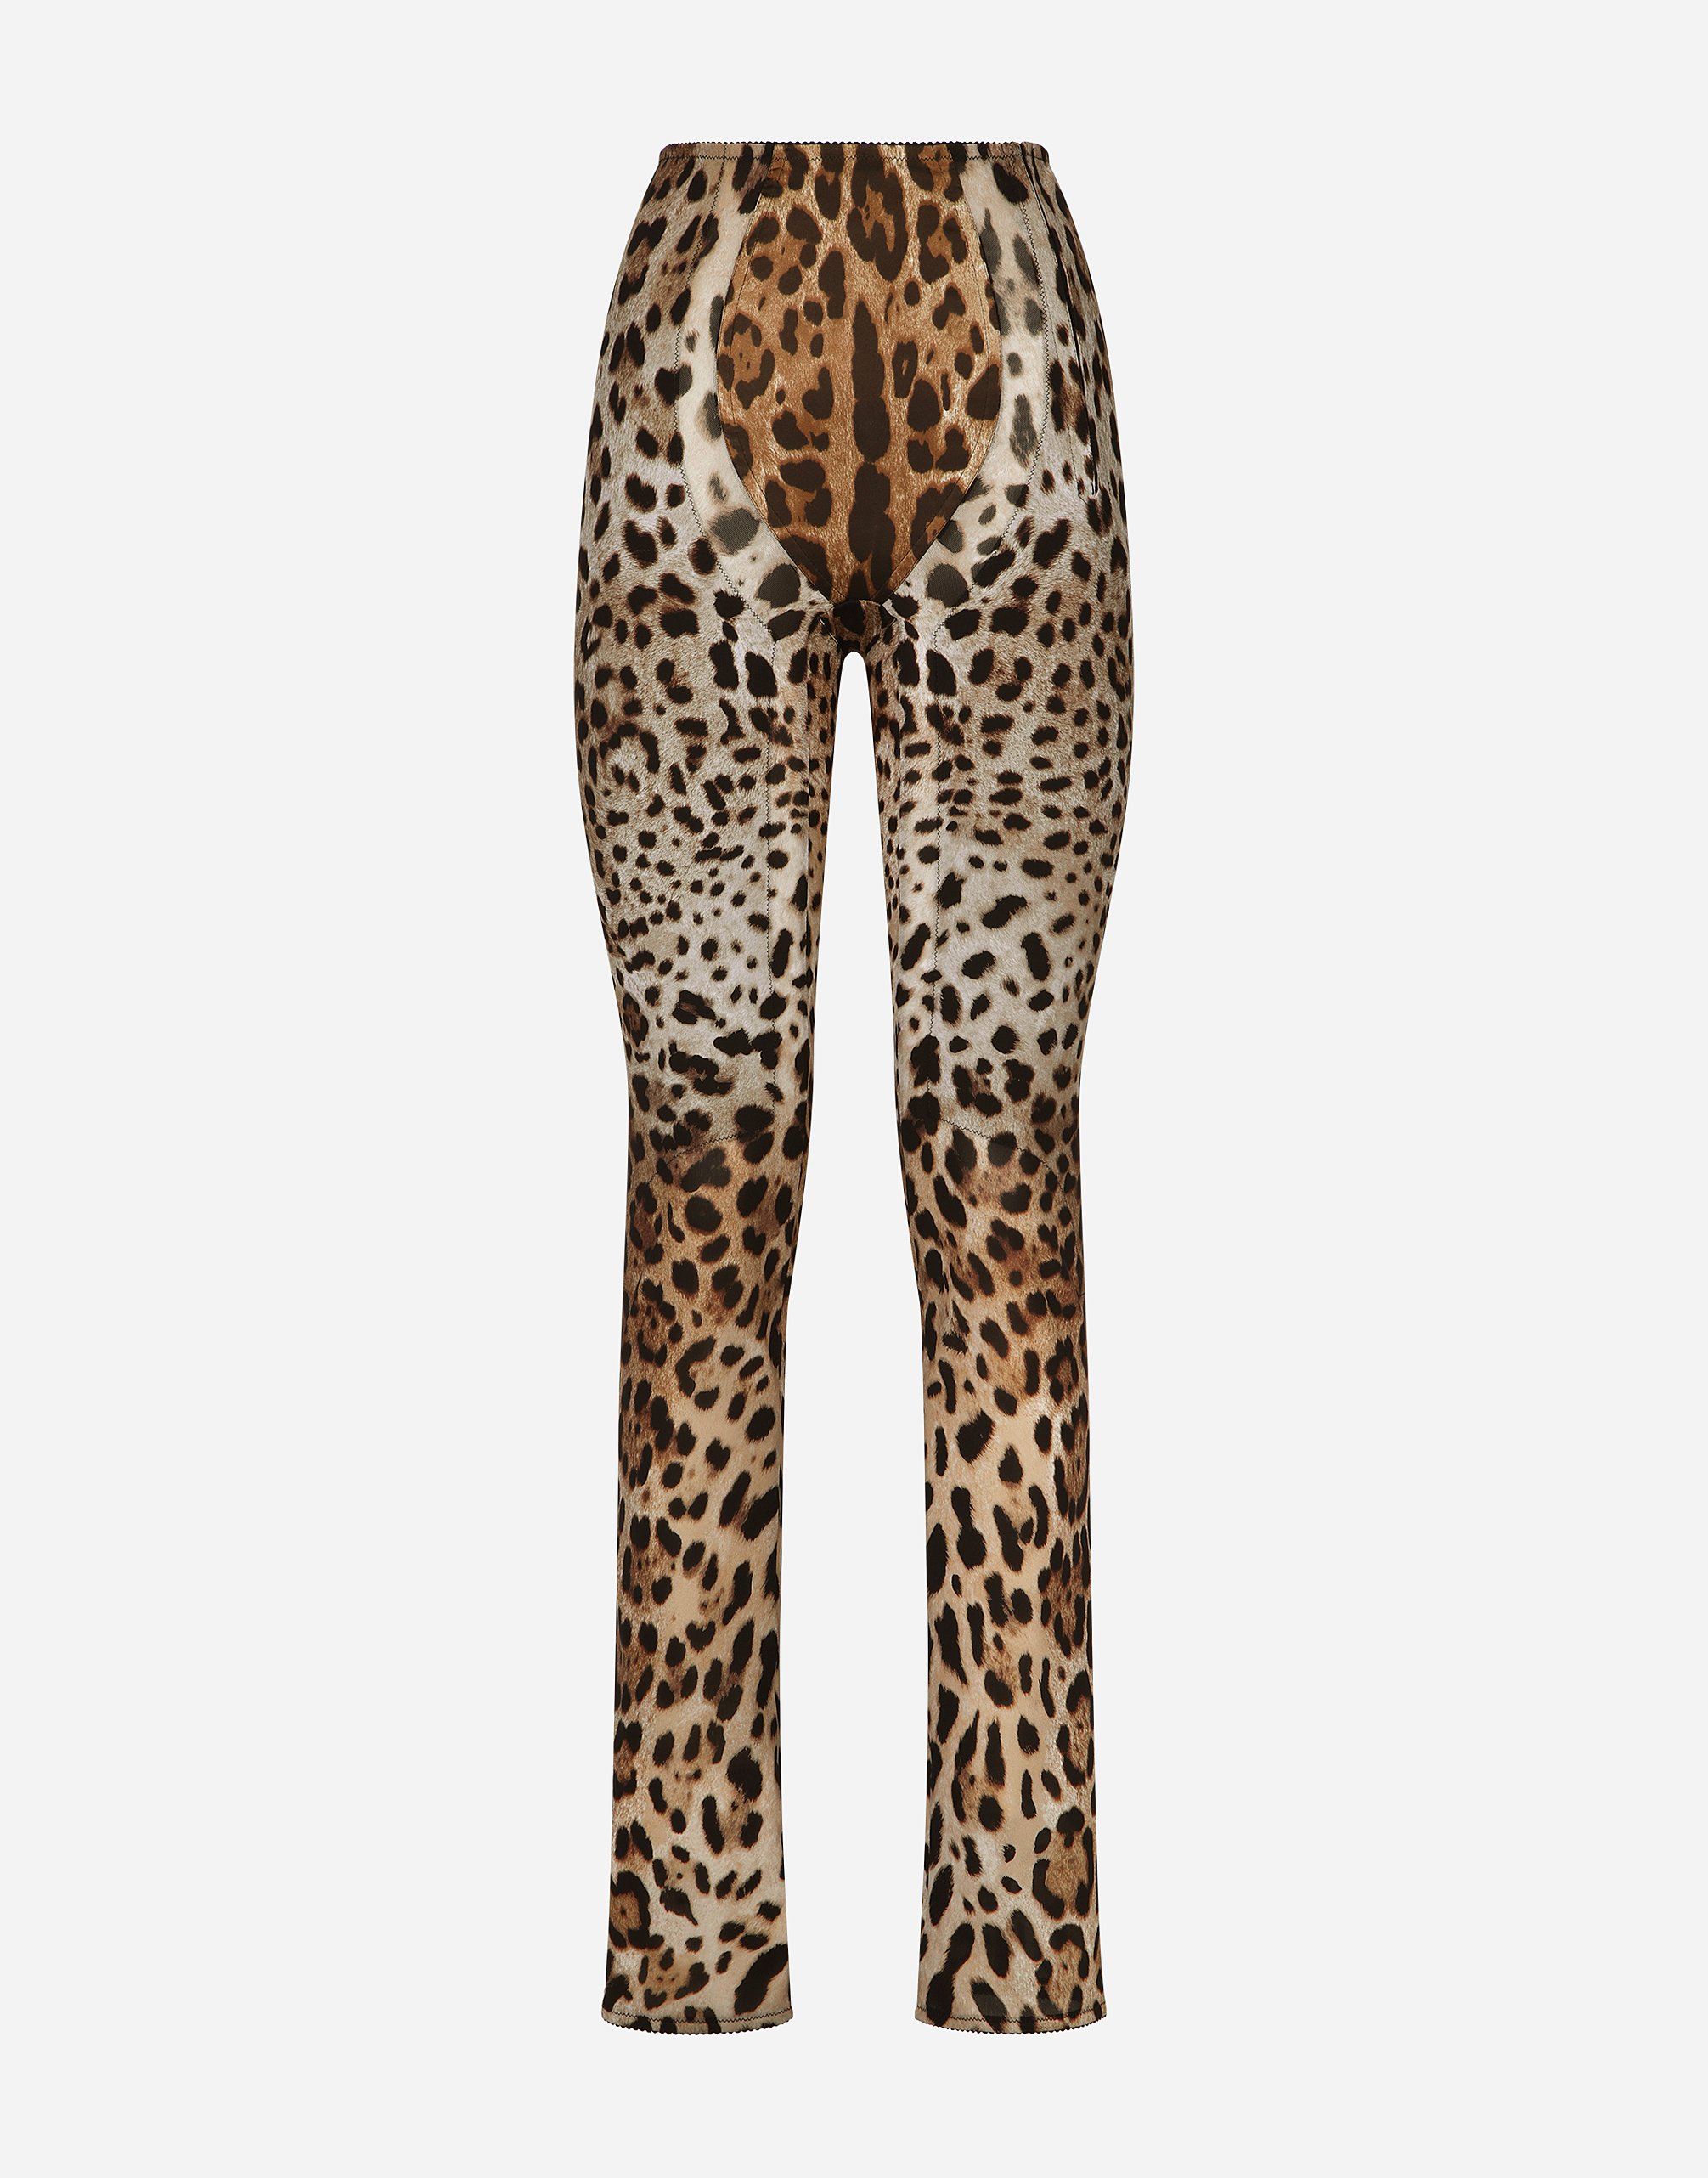 KIM DOLCE&GABBANA Leopard-print marquisette pants in Animal Print